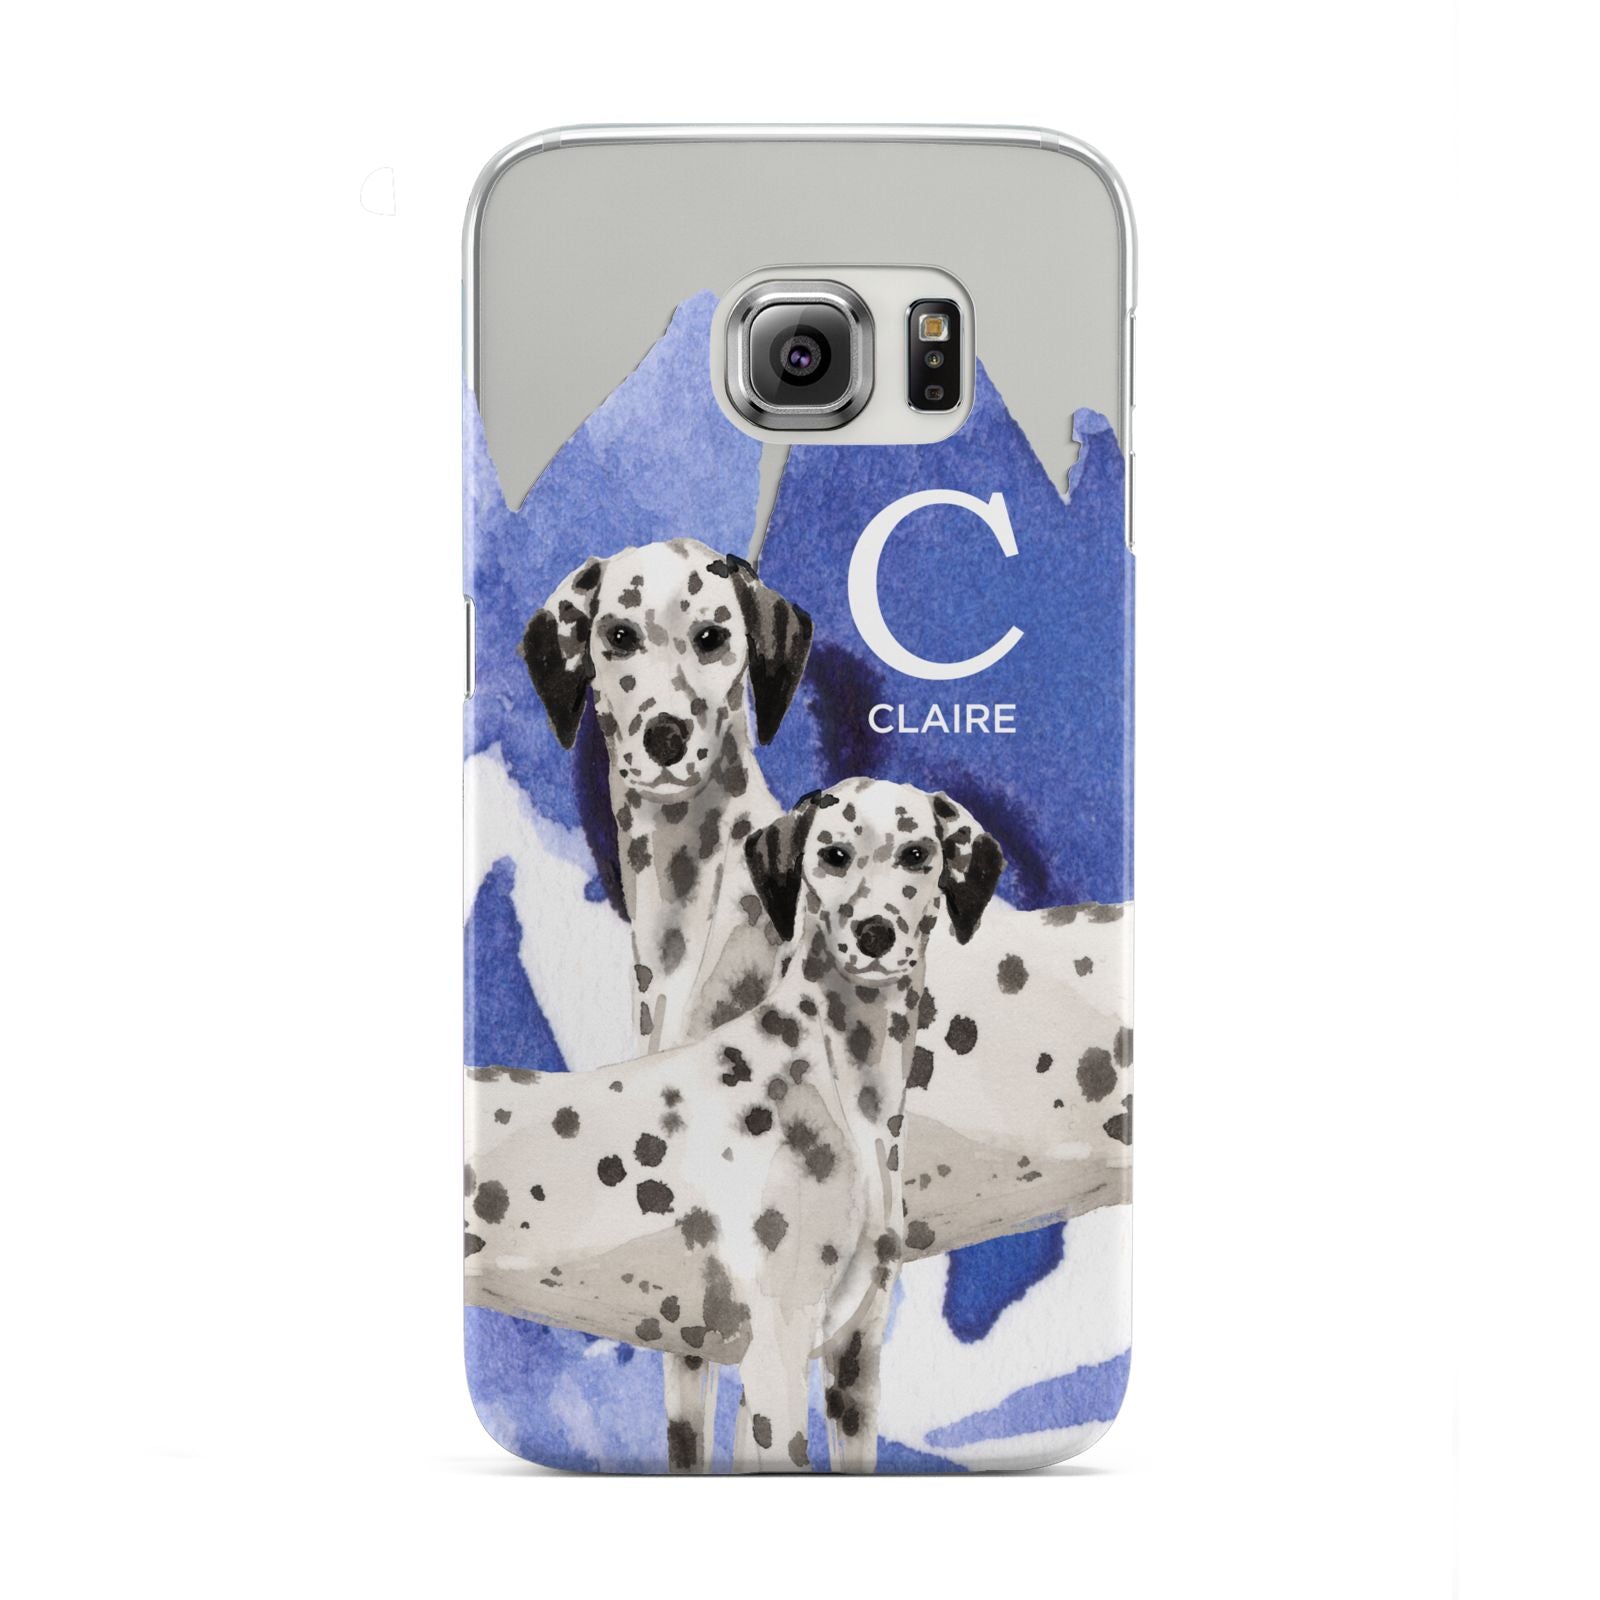 Personalised Dalmatian Samsung Galaxy S6 Edge Case